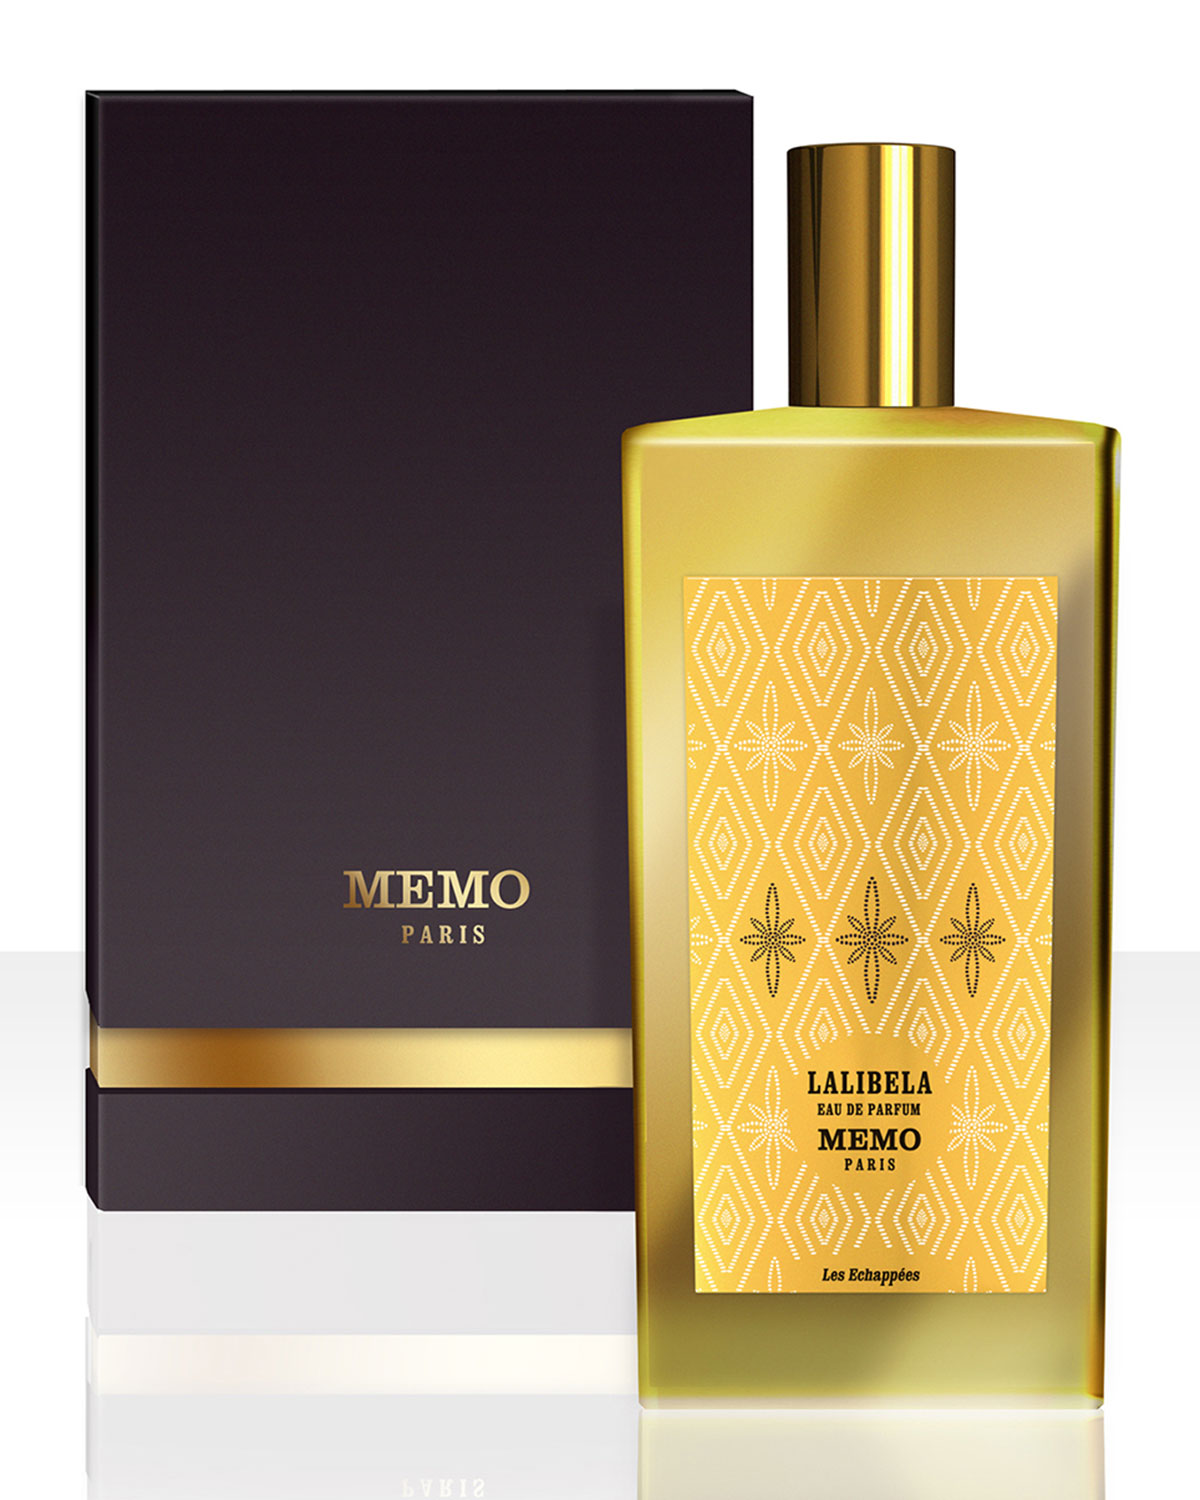 Lalibela Memo Paris perfume - a fragrance for women 2007